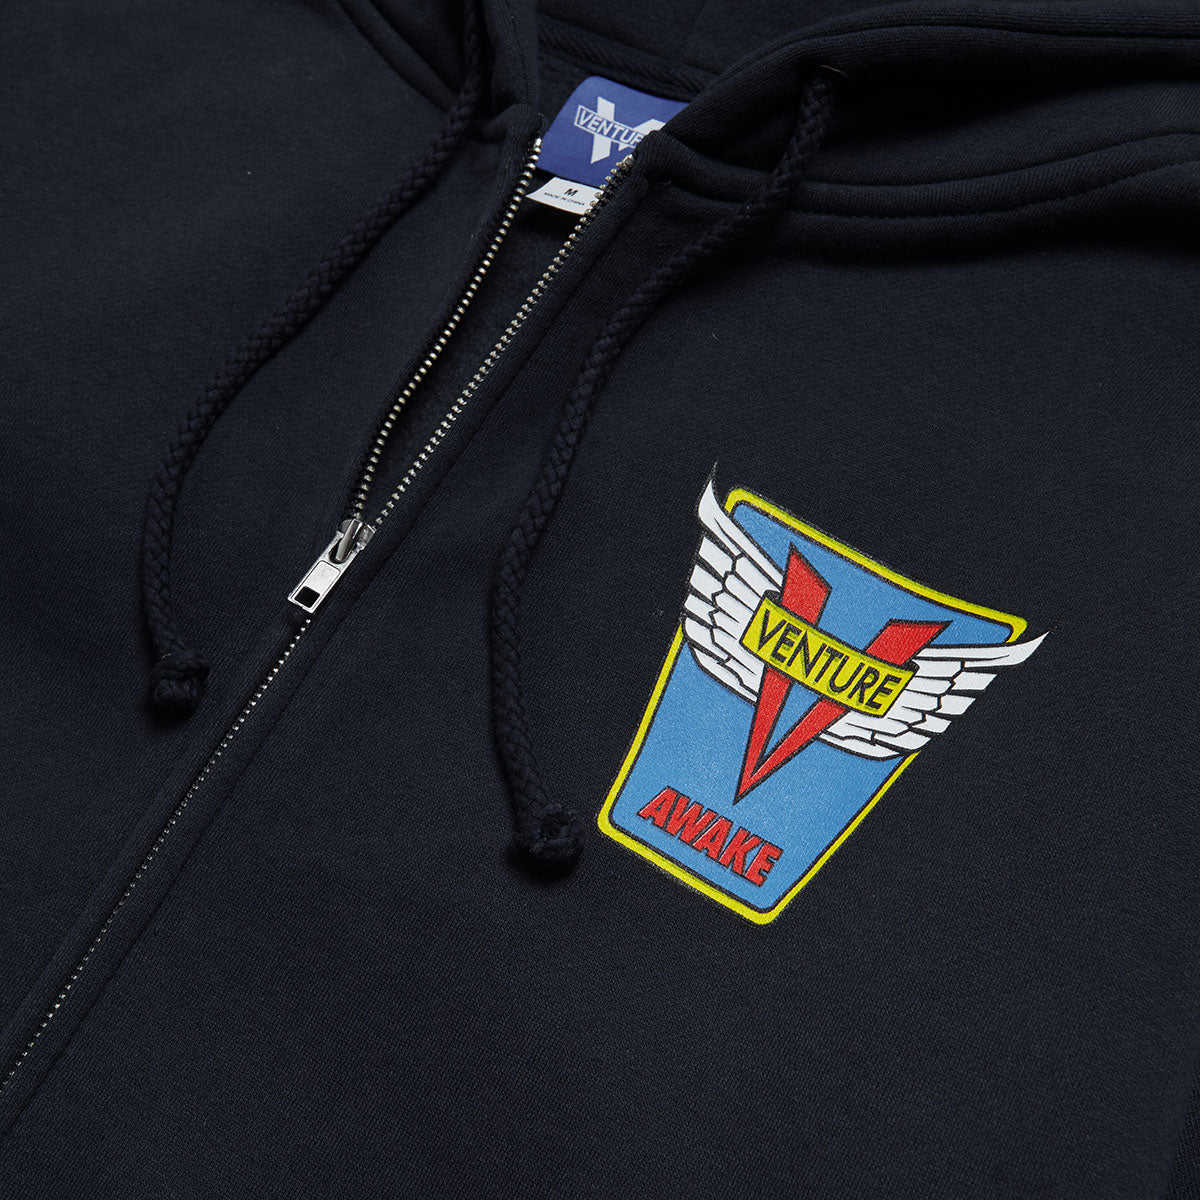 Venture Emblem Zip Hoodie - Navy/Blue/Yellow/Red image 2